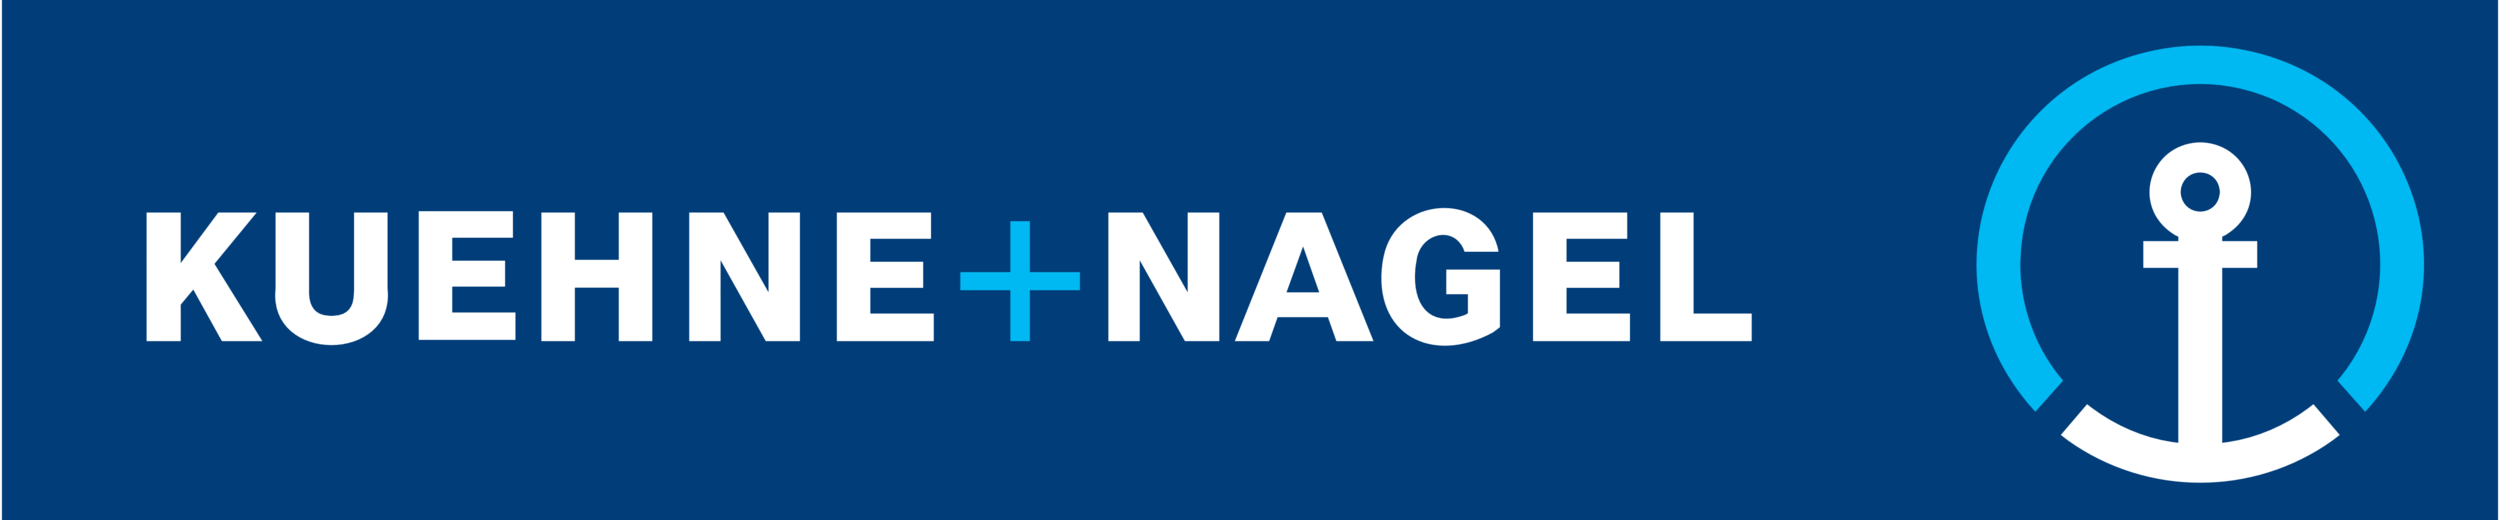 Kuehne_Nagel_logo_blue_bg.png